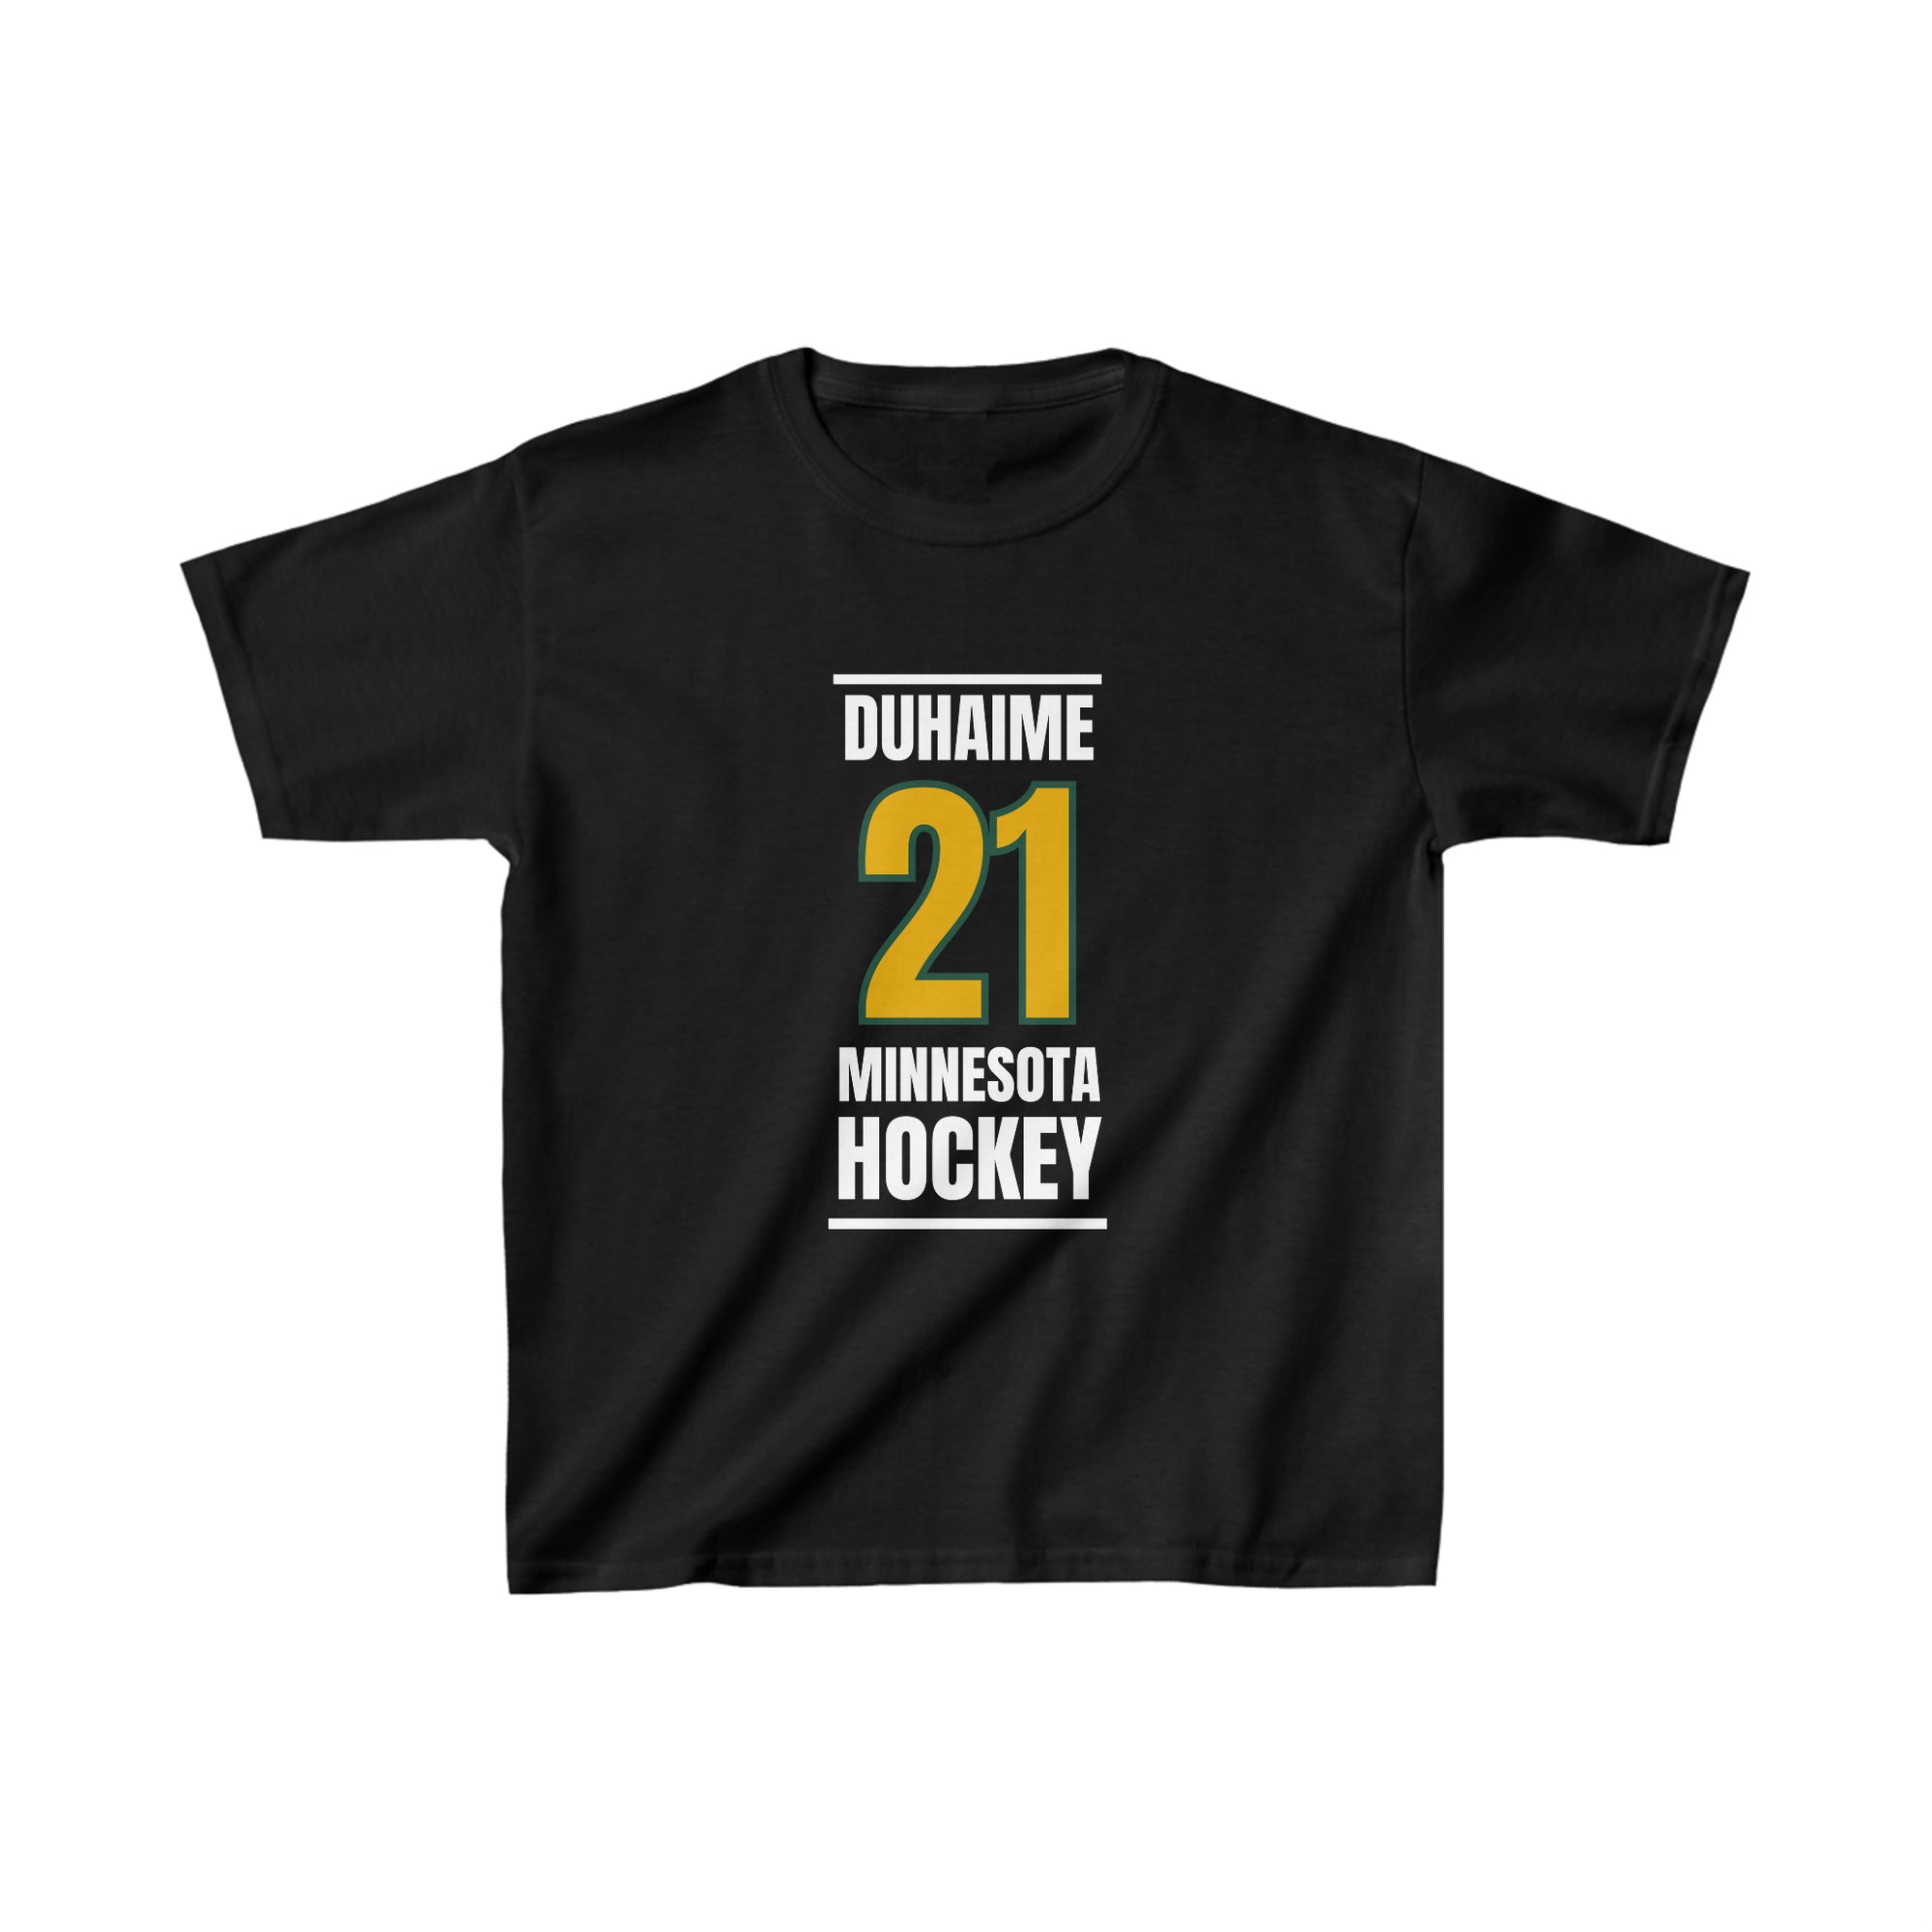 Duhaime 21 Minnesota Hockey Gold Vertical Design Kids Tee